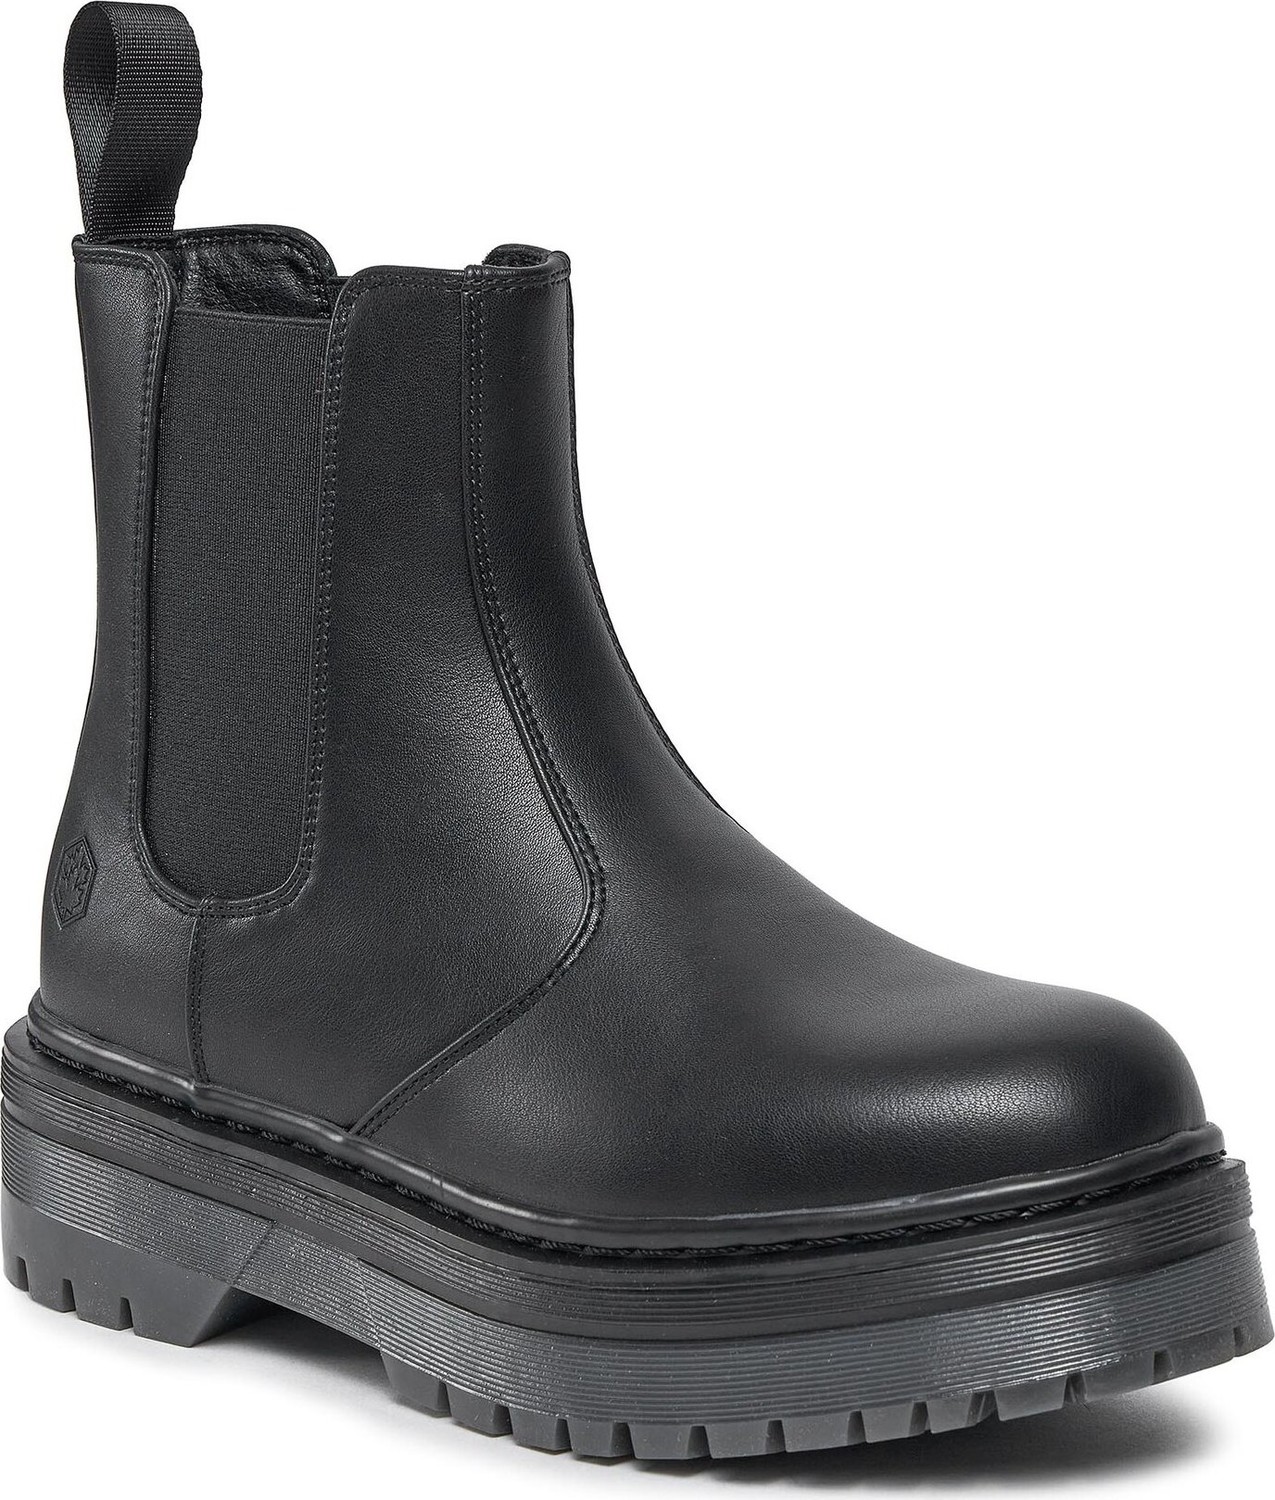 Kotníková obuv s elastickým prvkem Lumberjack ELYSE SWC1513-001-S01 Black/Black M0880